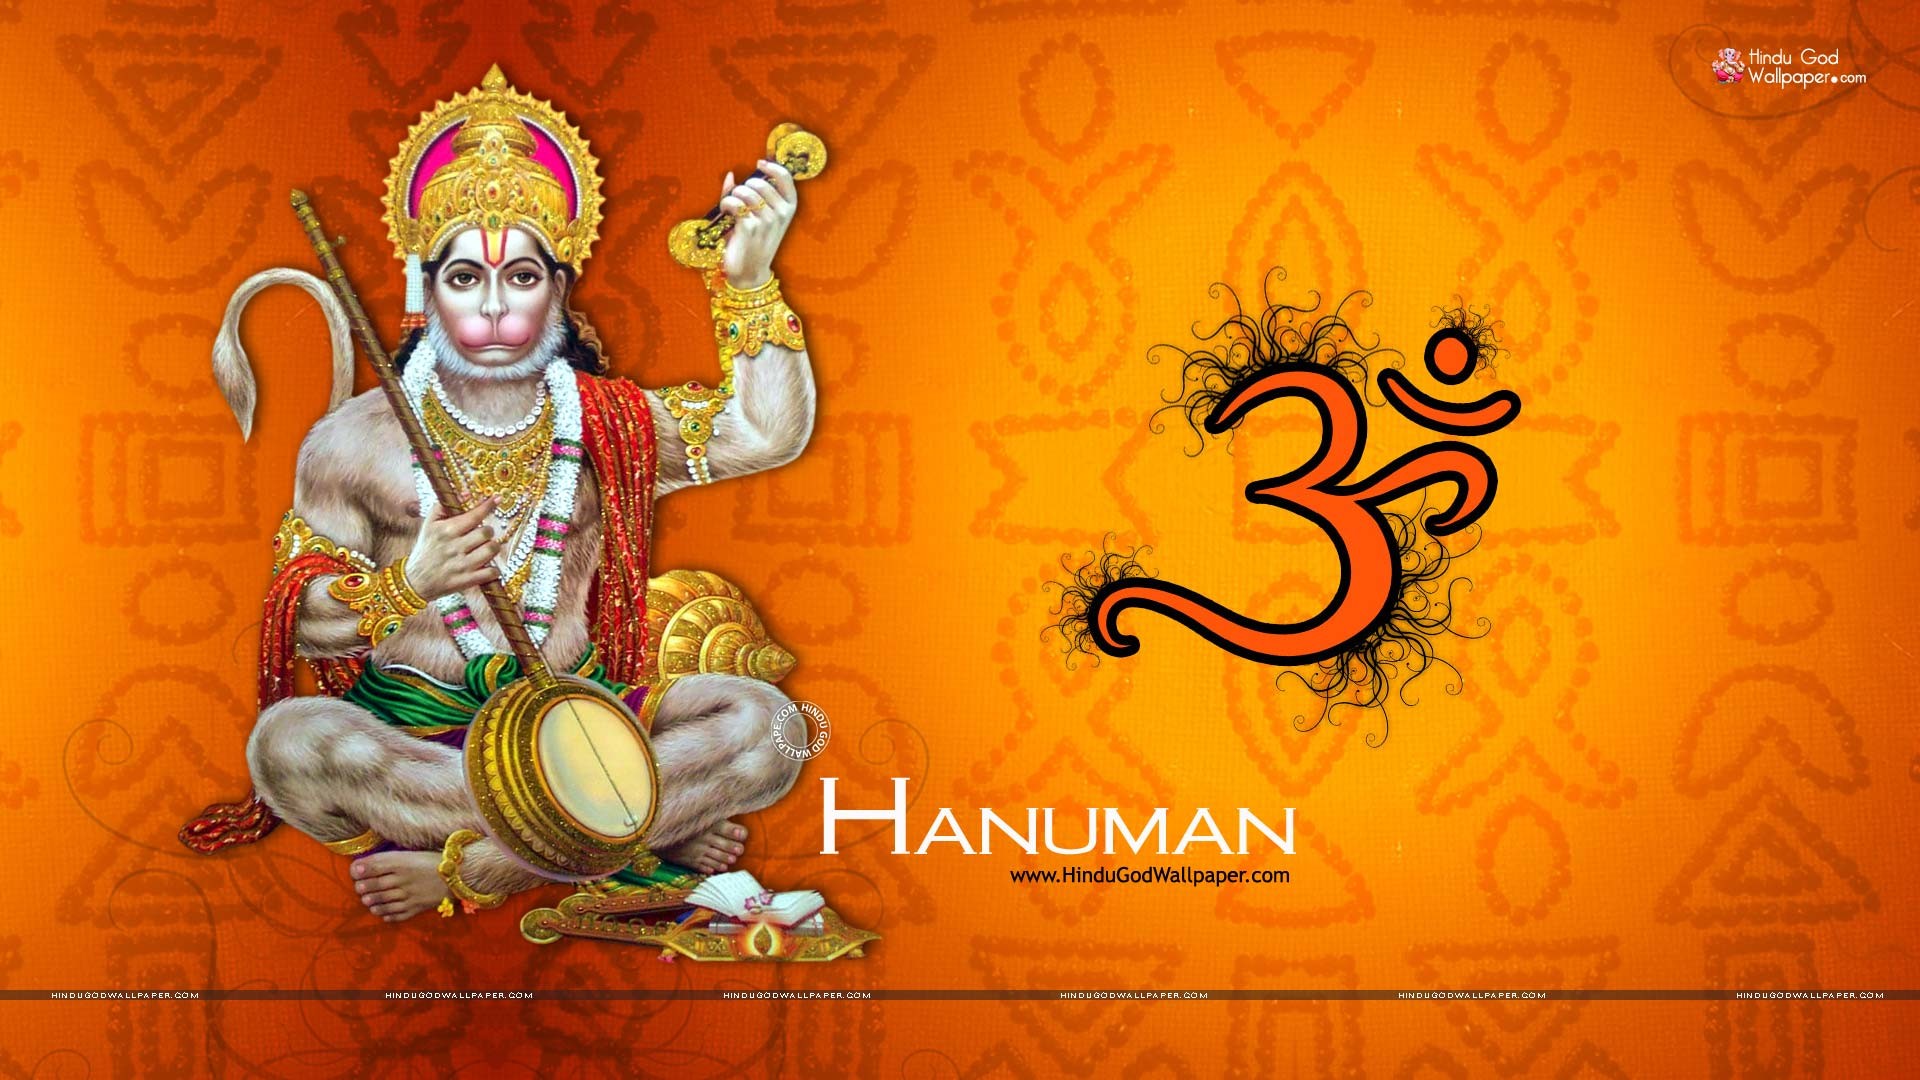 Hindu God Hd Wallpapers 1366x768 - Wallpapers Hindu God Gods Vasant